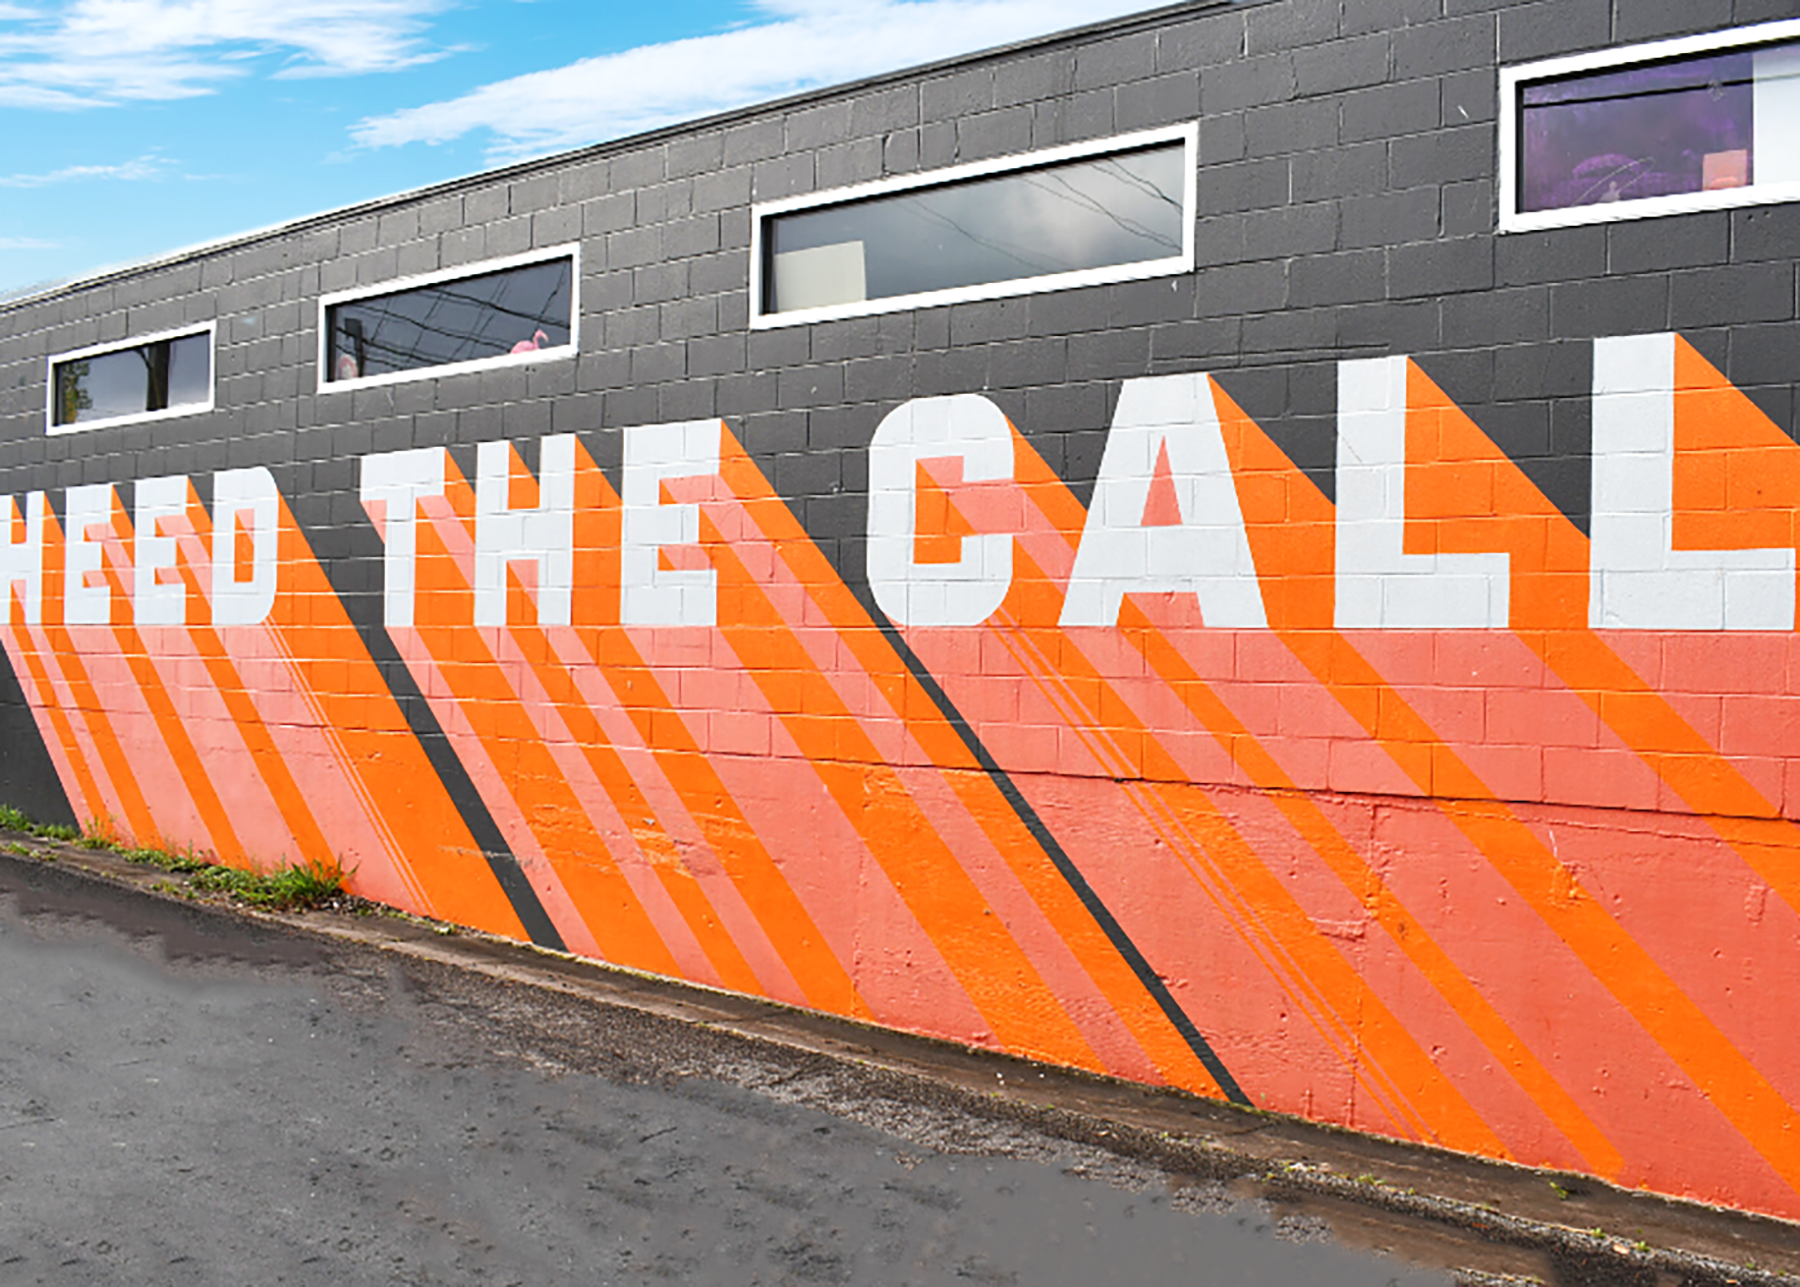 Heed the Call mural